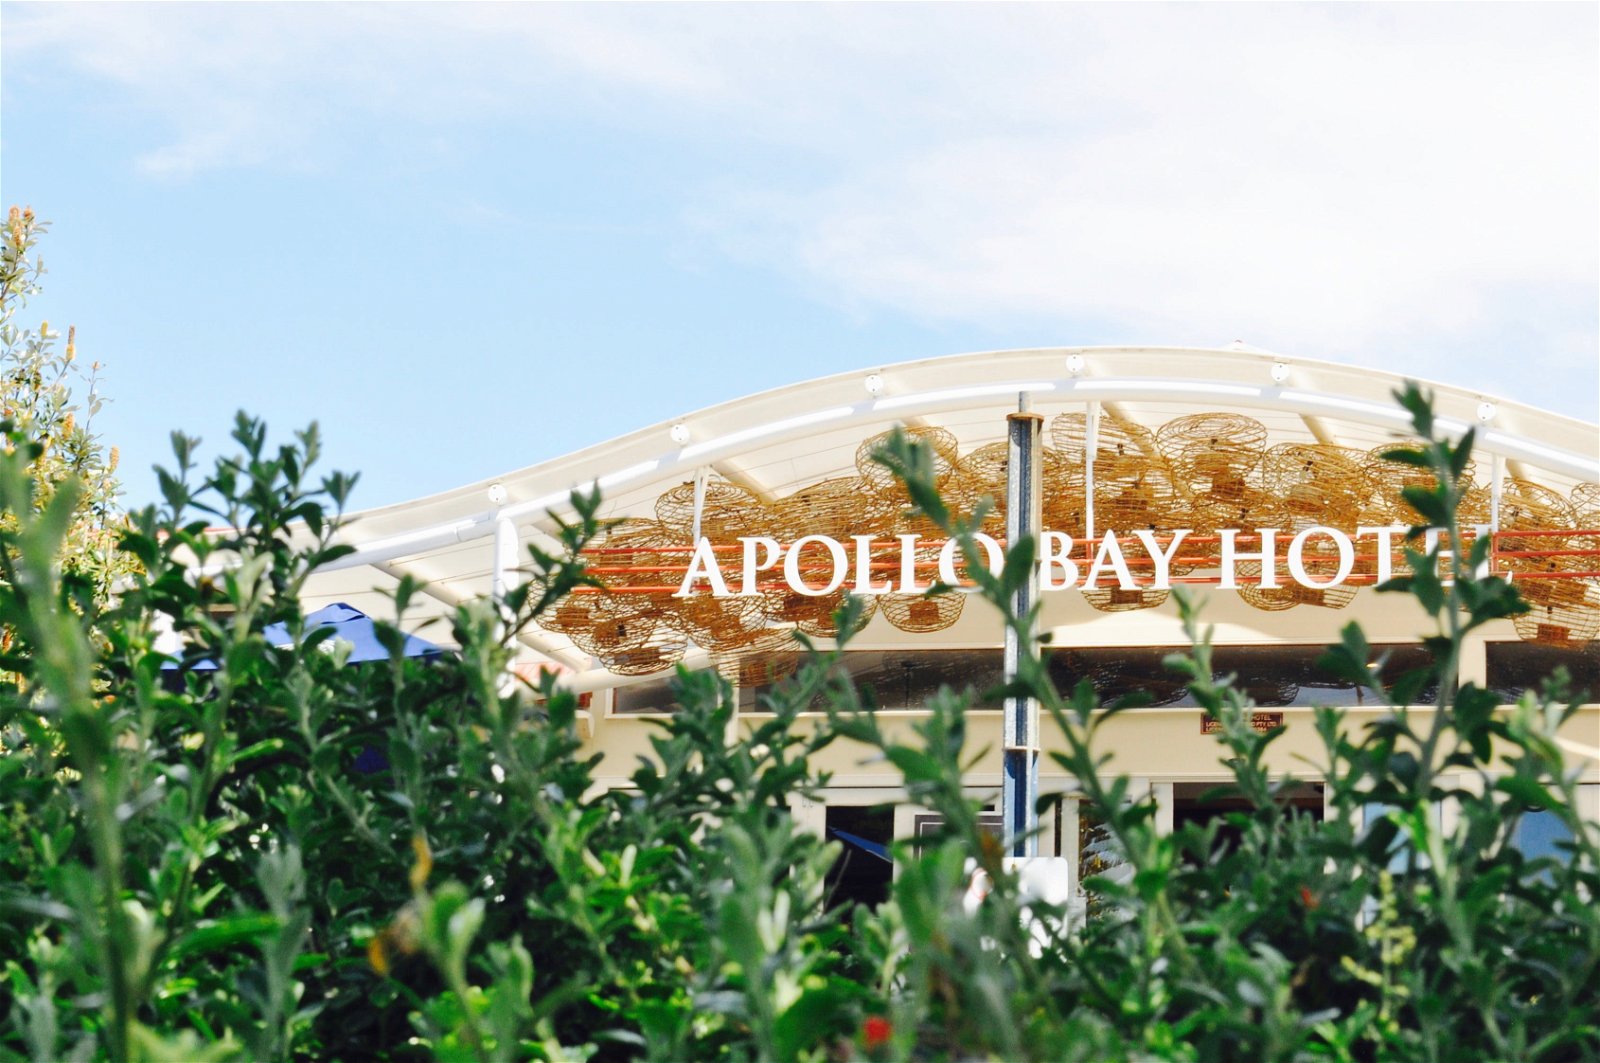 Apollo Bay Hotel - Surfers Paradise Gold Coast